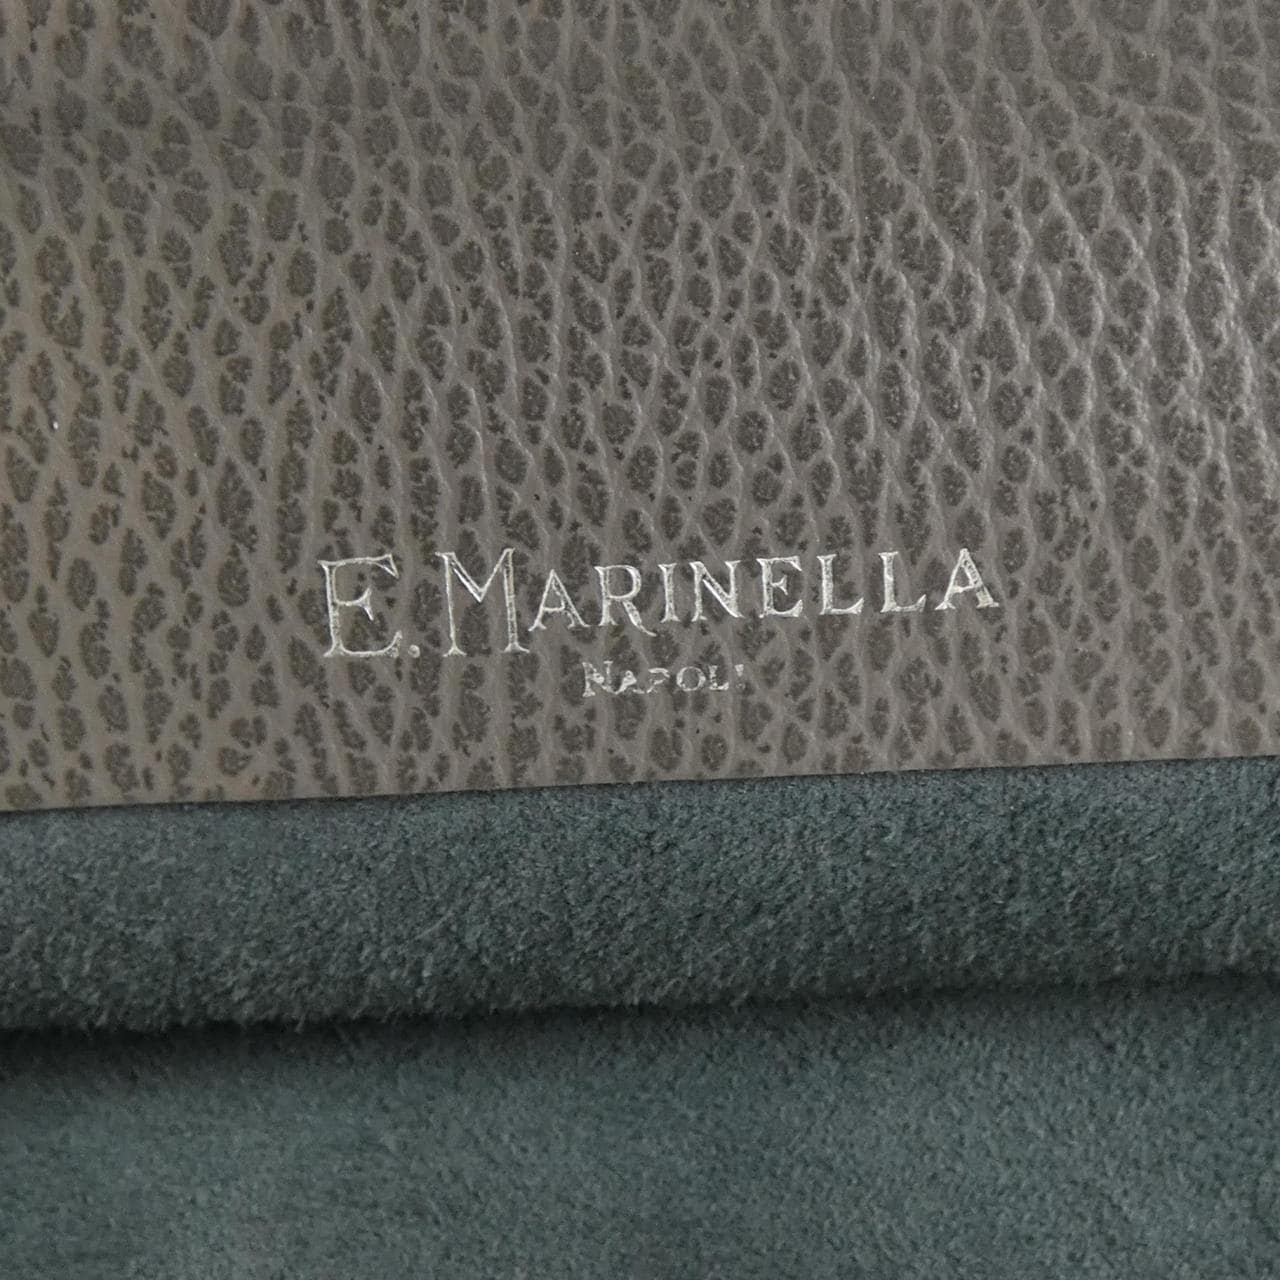 Marinella E.MARINELLA BAG